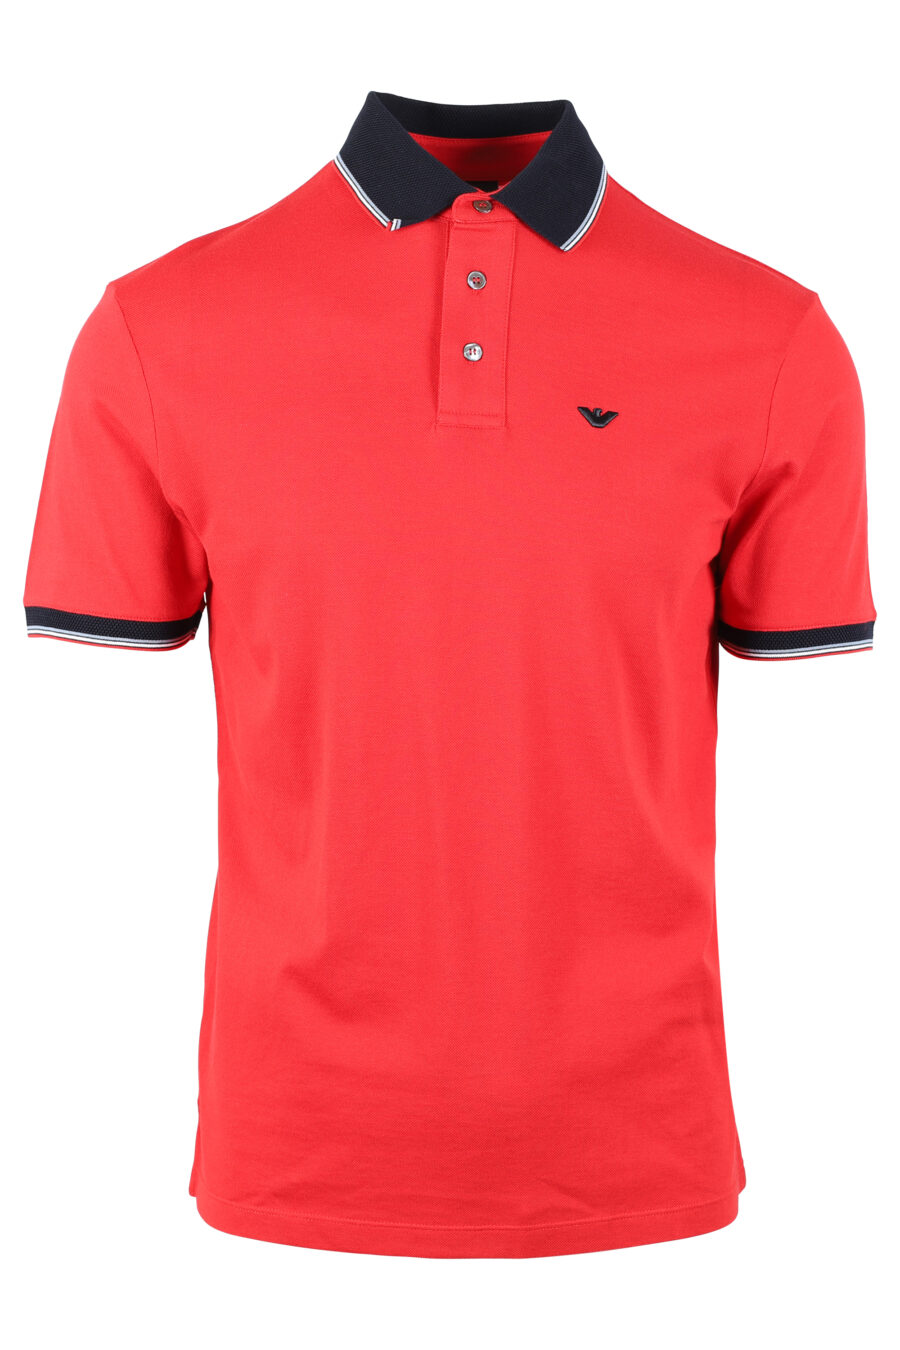 Rotes Poloshirt mit schwarzem und Adler-Mini-Logo - IMG 4744